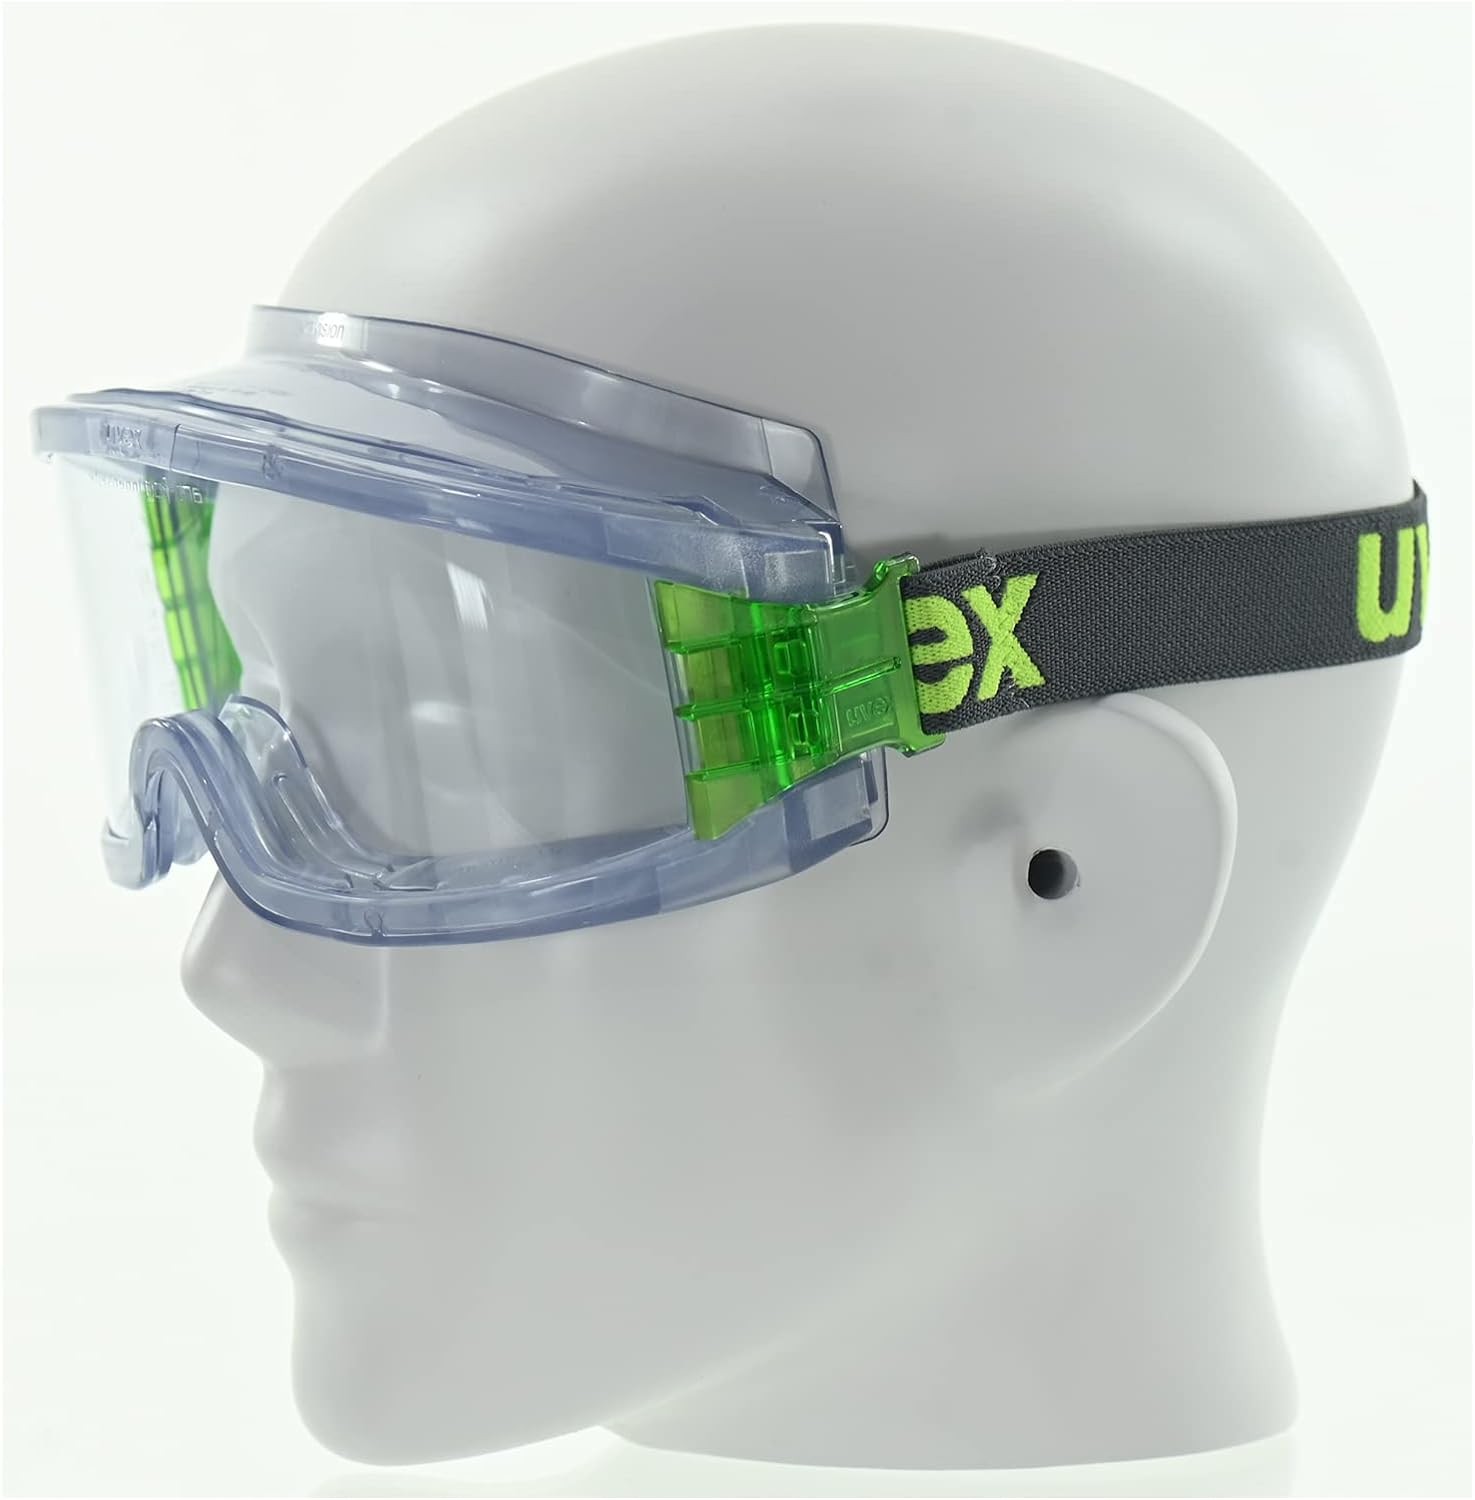 Uvex Ultravision Goggle Glasses